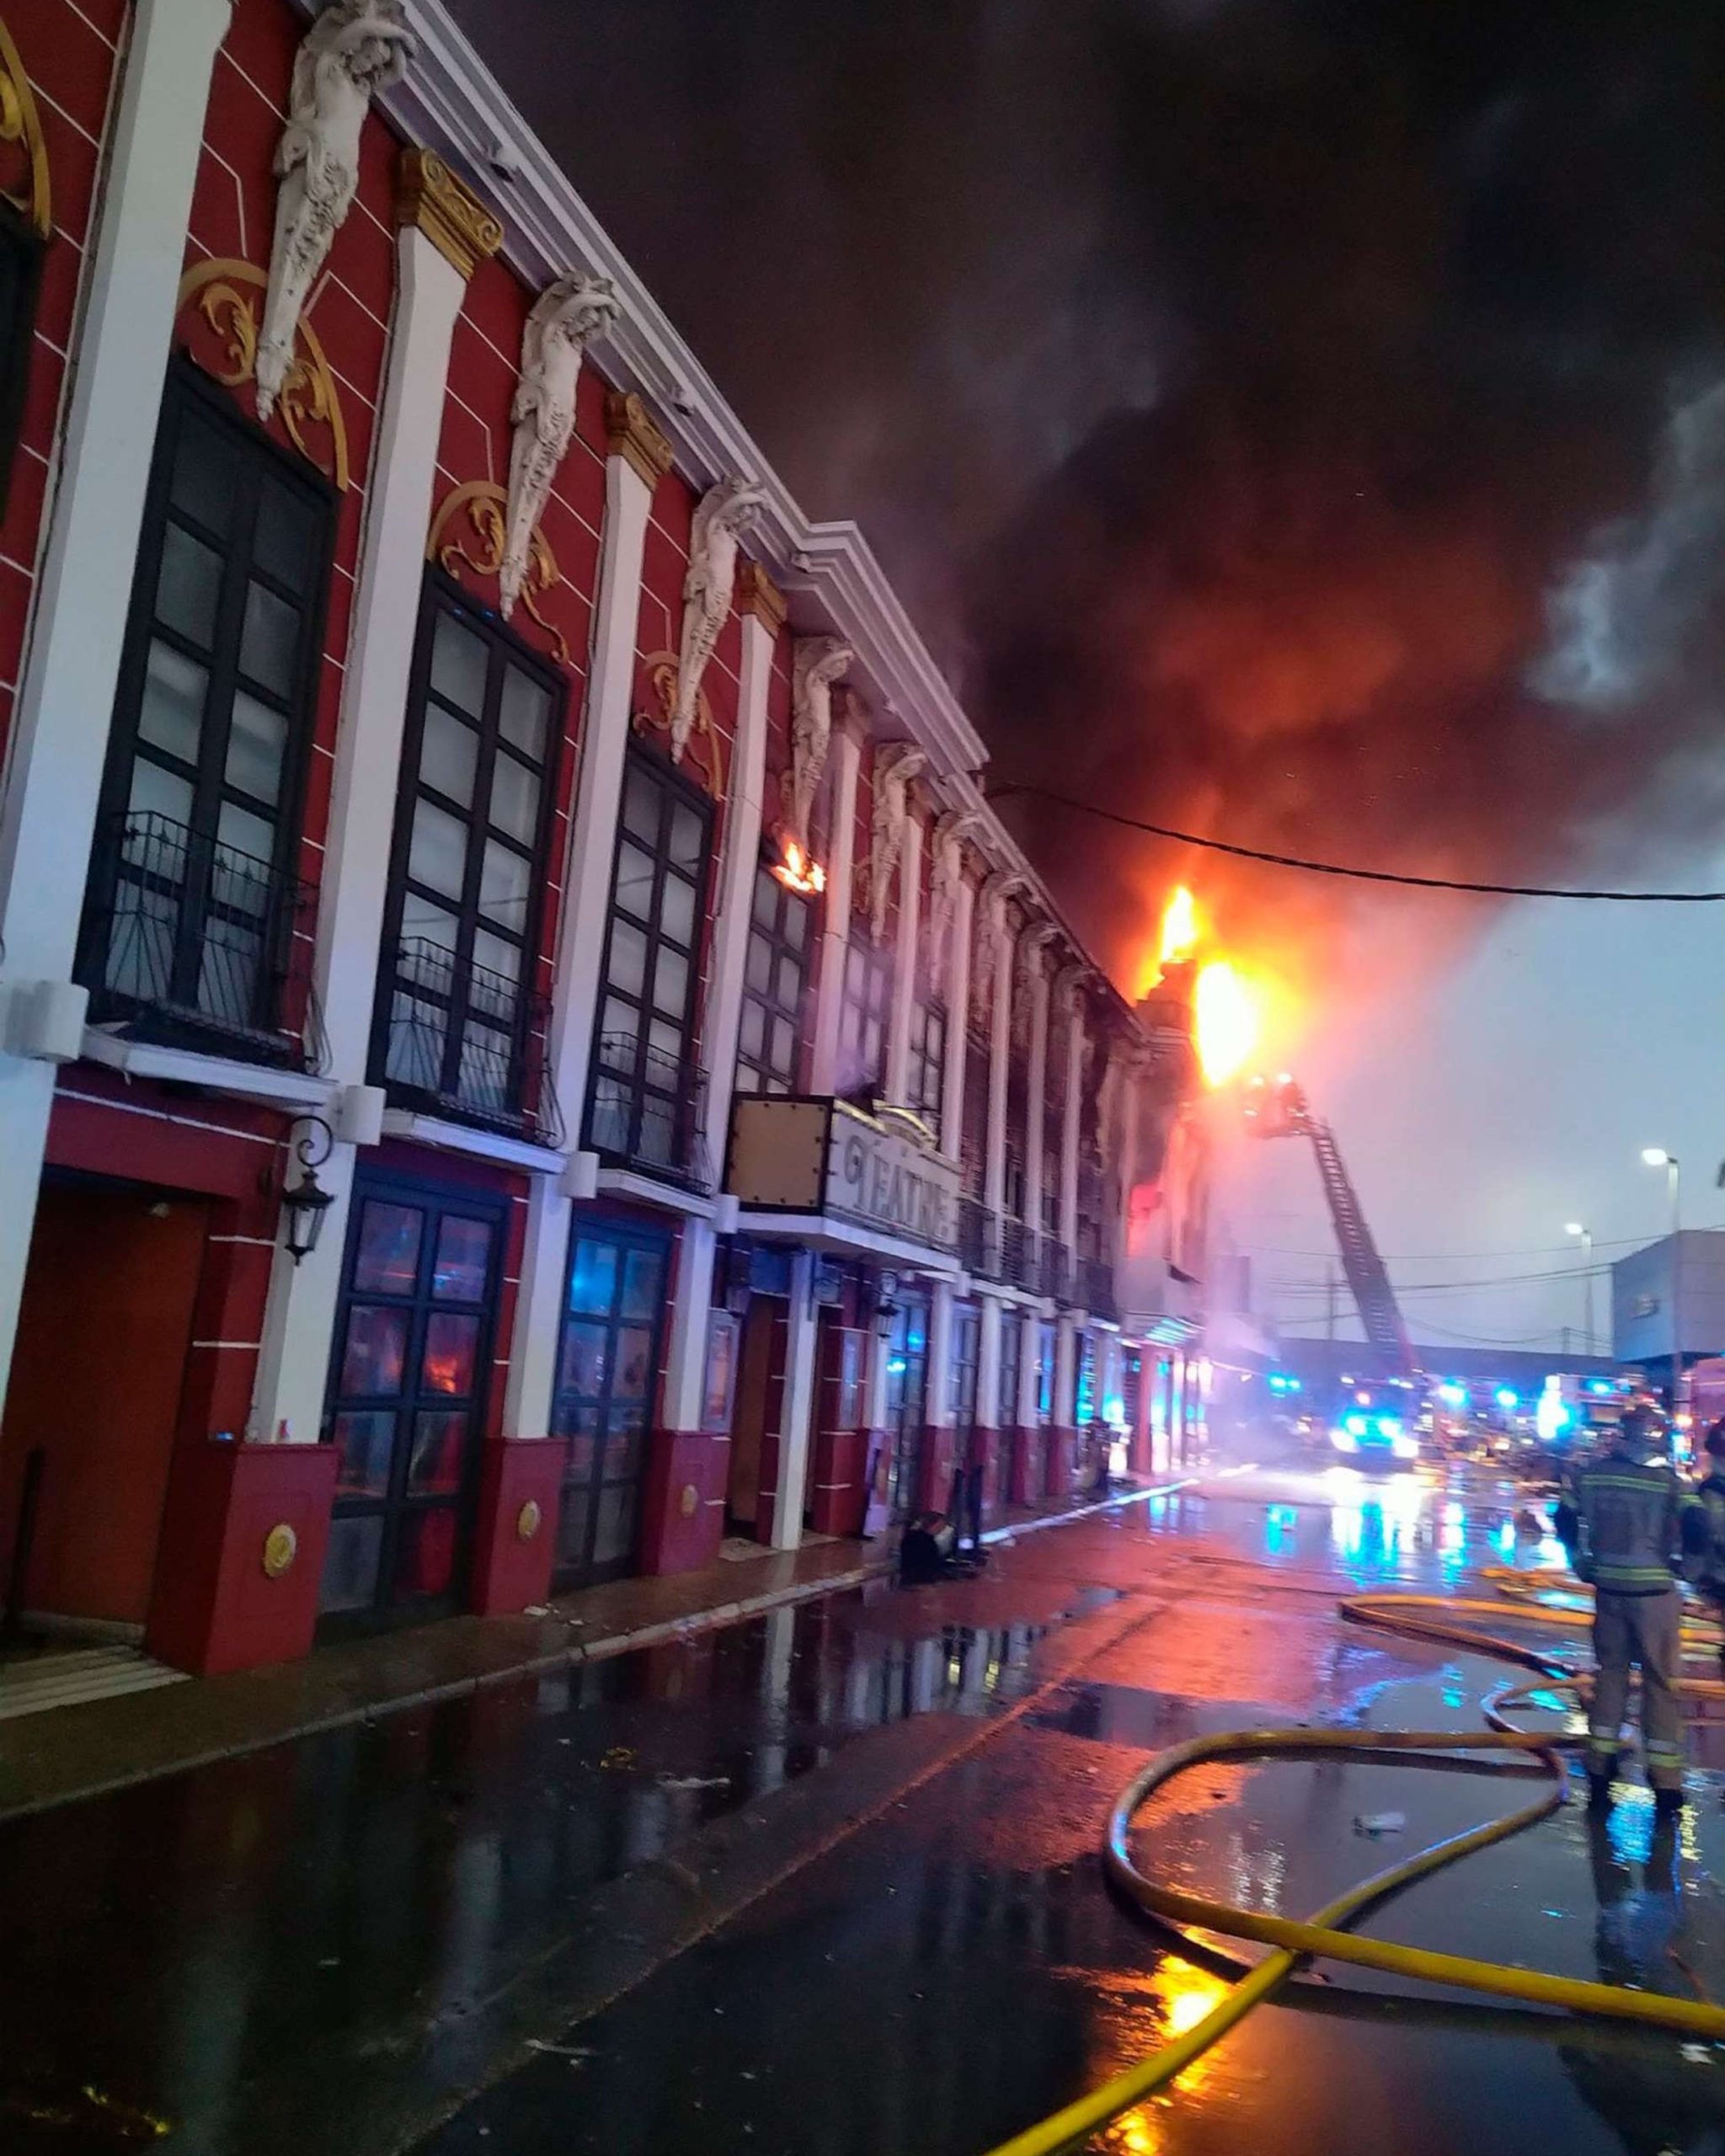 Thirteen fatalities reported following a devastating nightclub fire in Spain